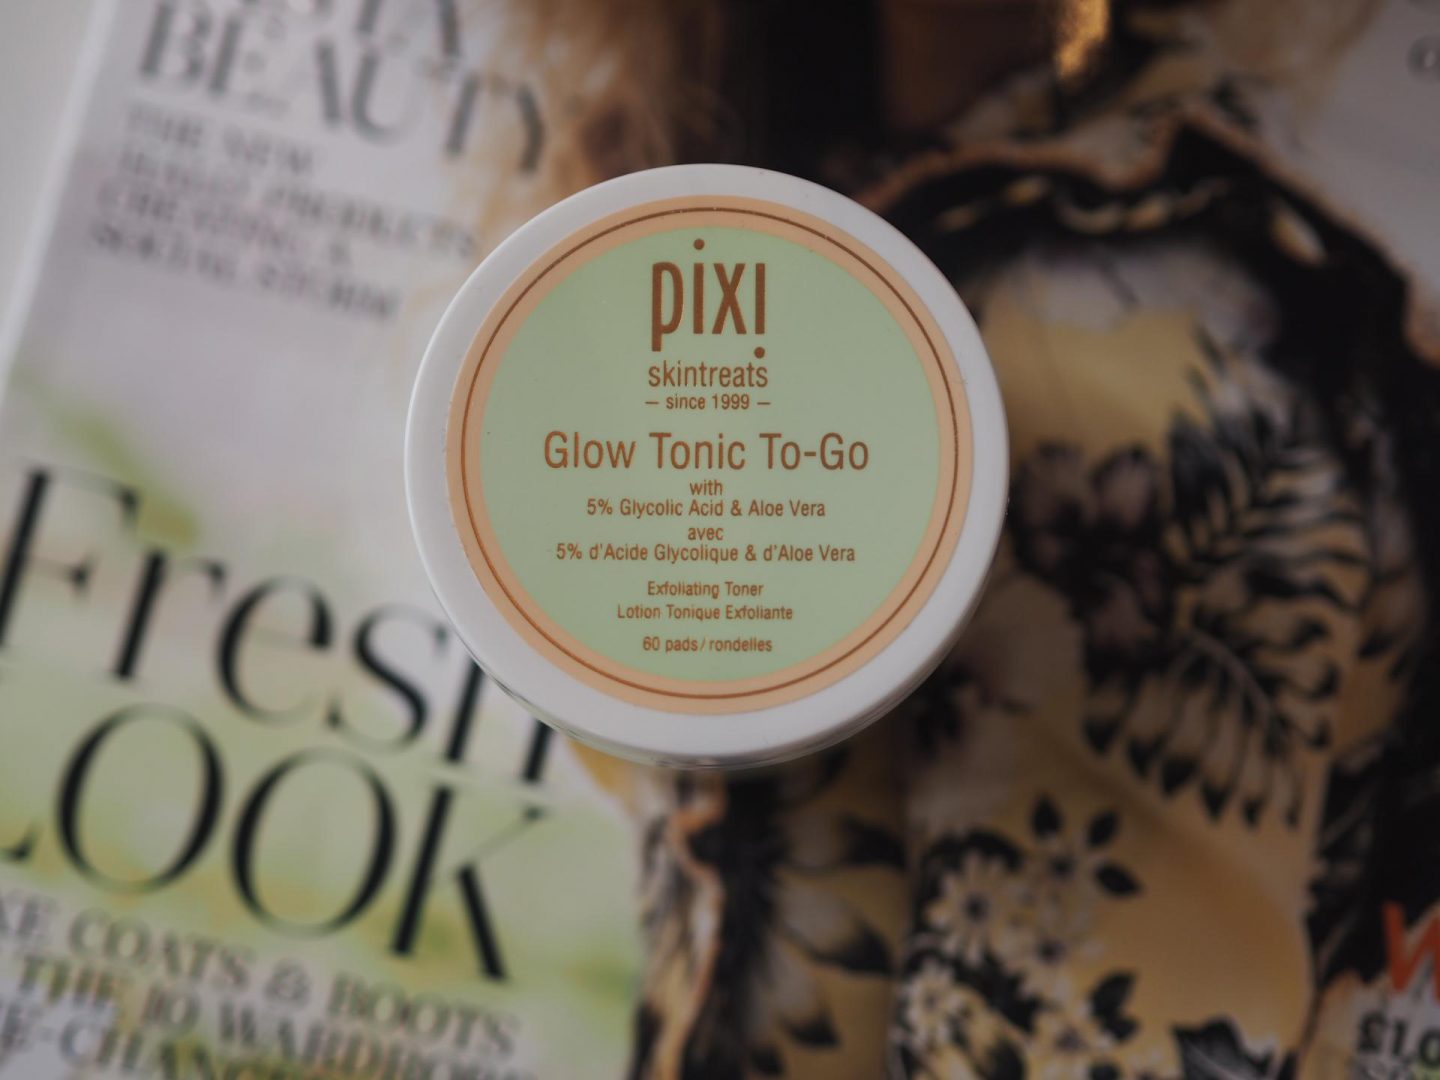 November Beauty Favourites - Product: Pixi Glow Tonic To-Go